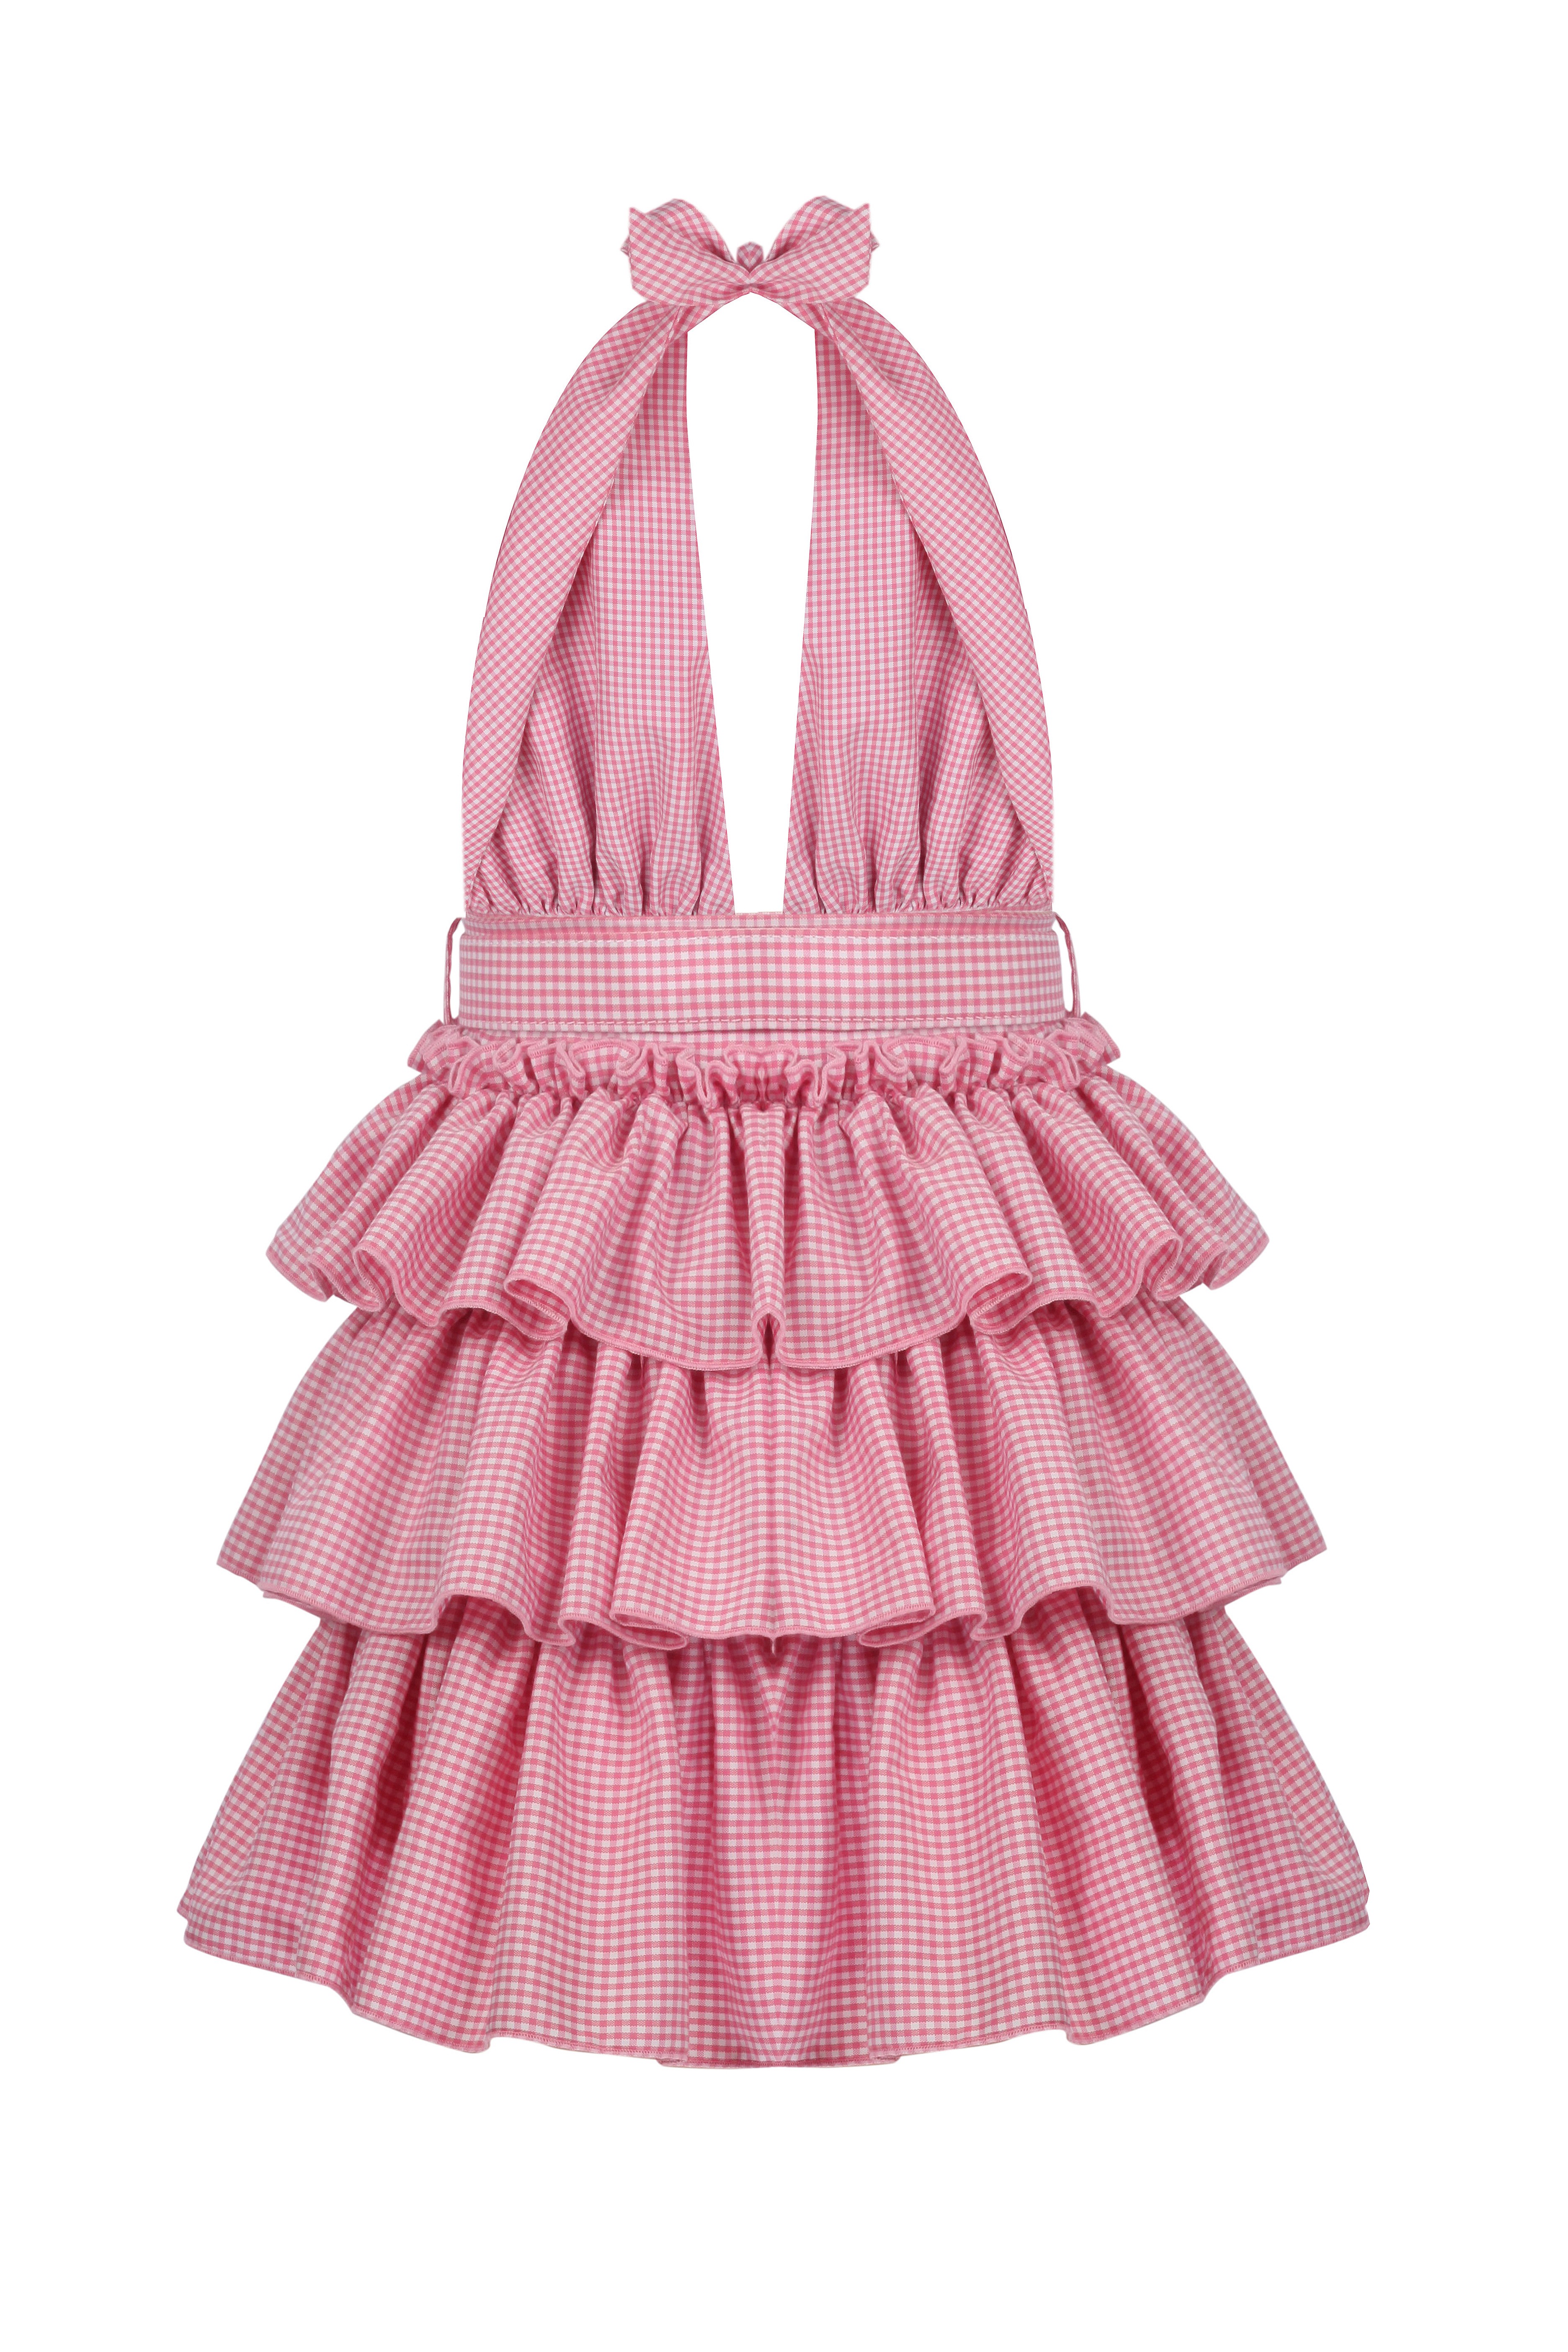 Bellano Pink Dress